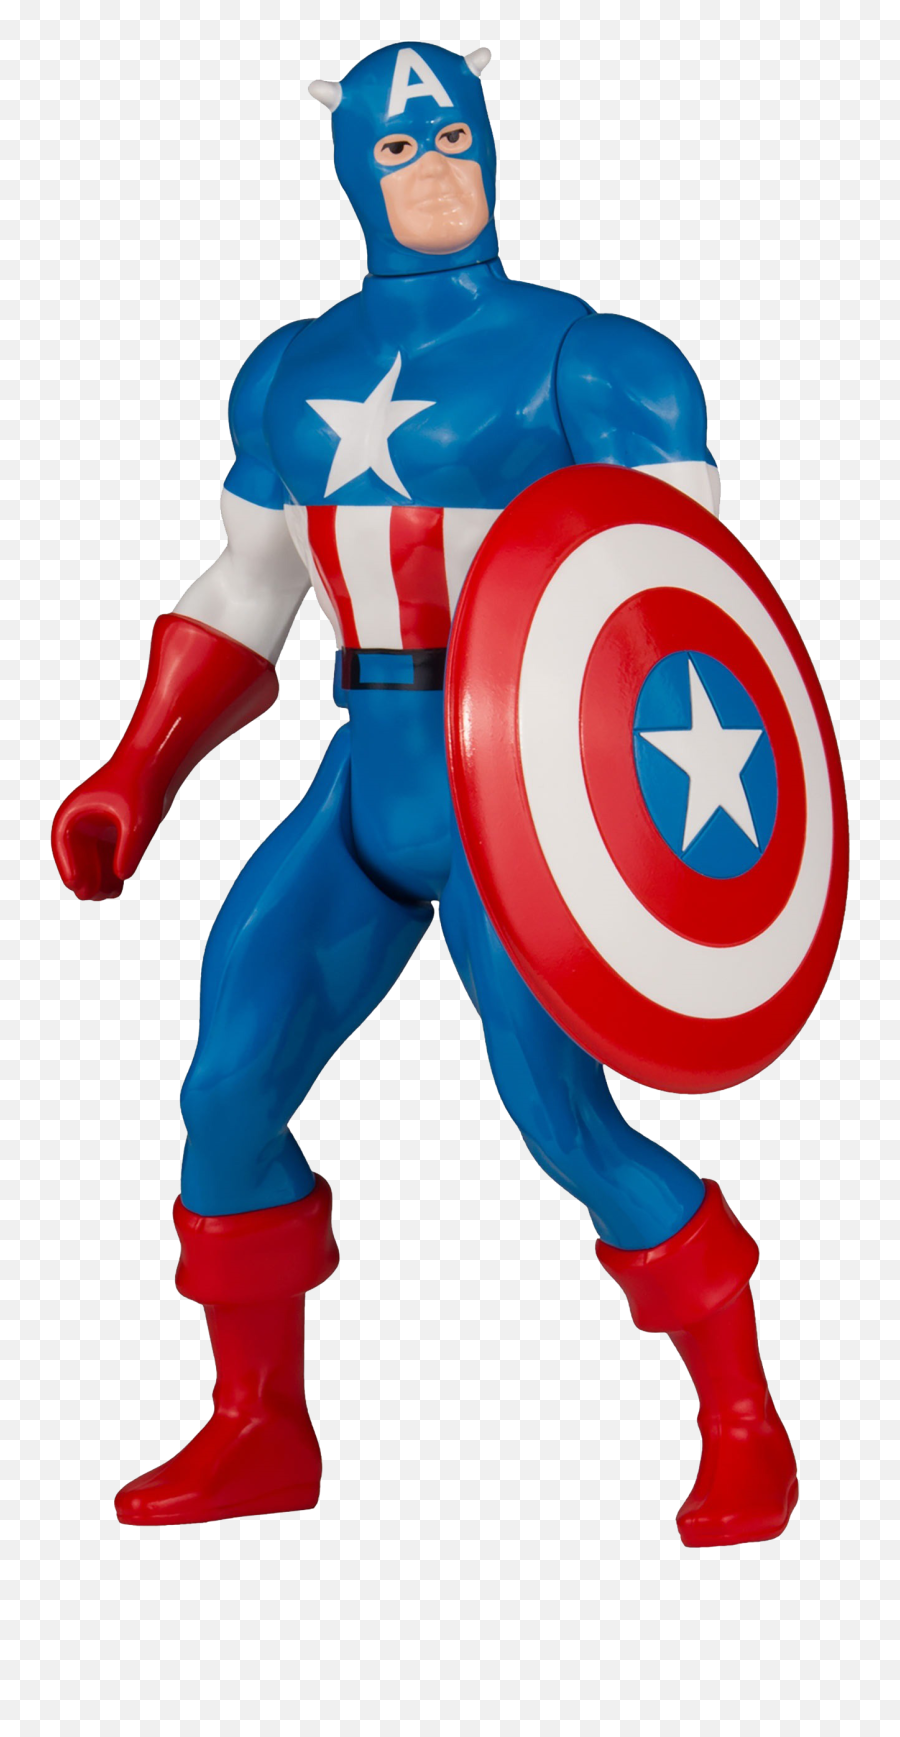 Captain America Png Images Transparent - Good Shield For Captain America Secret Wars,Captain America Transparent Background